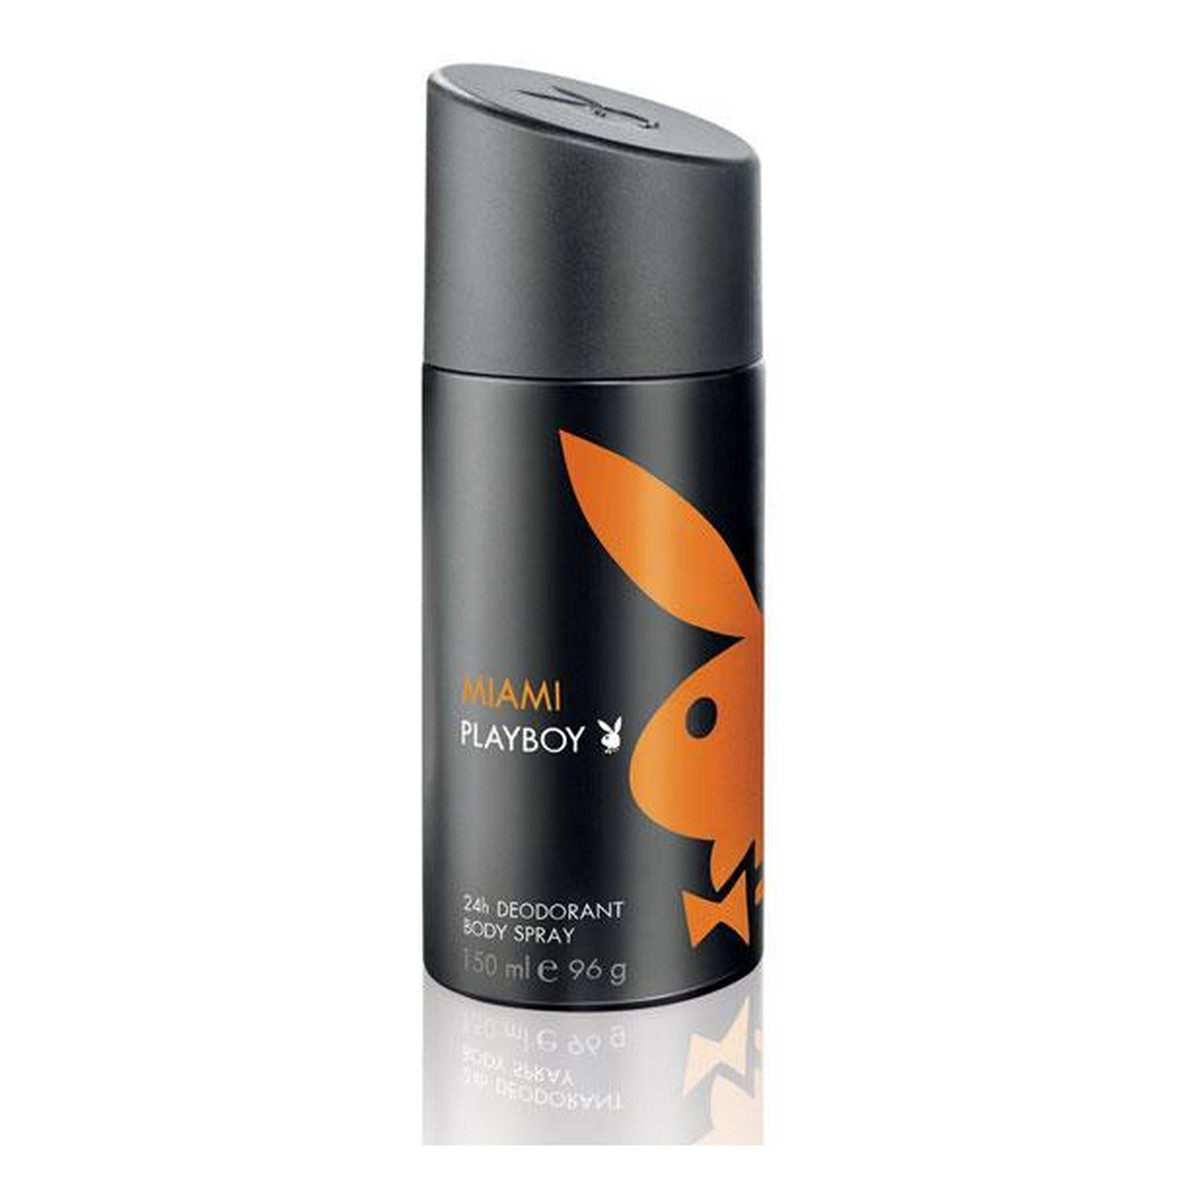 Playboy Miami Dezodorant Spray 150ml